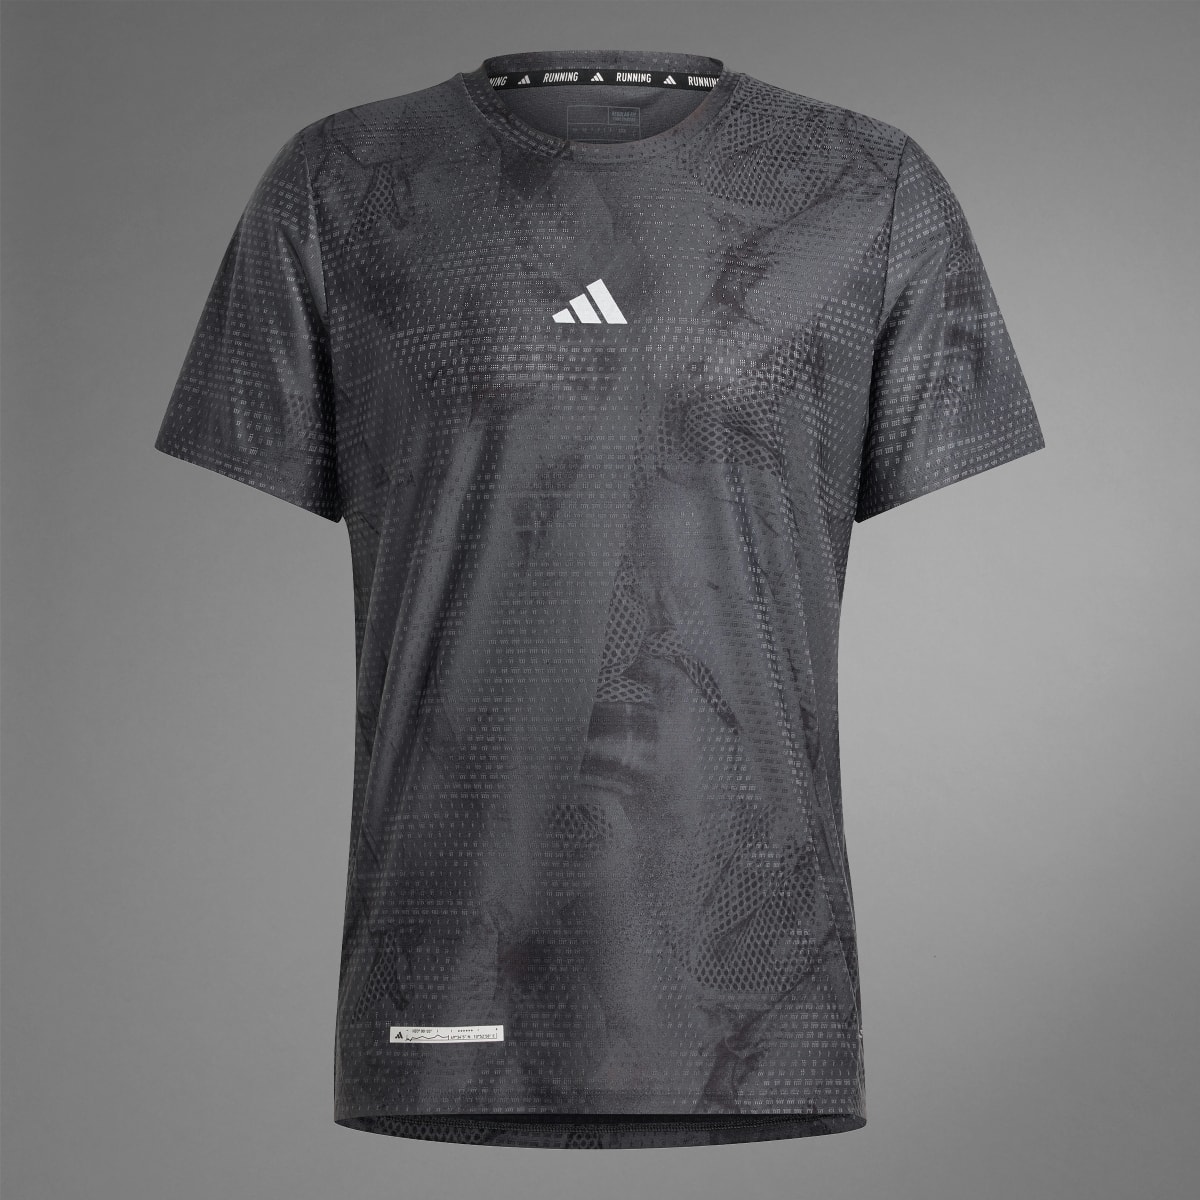 Adidas Ultimateadidas Allover Print T-Shirt. 9